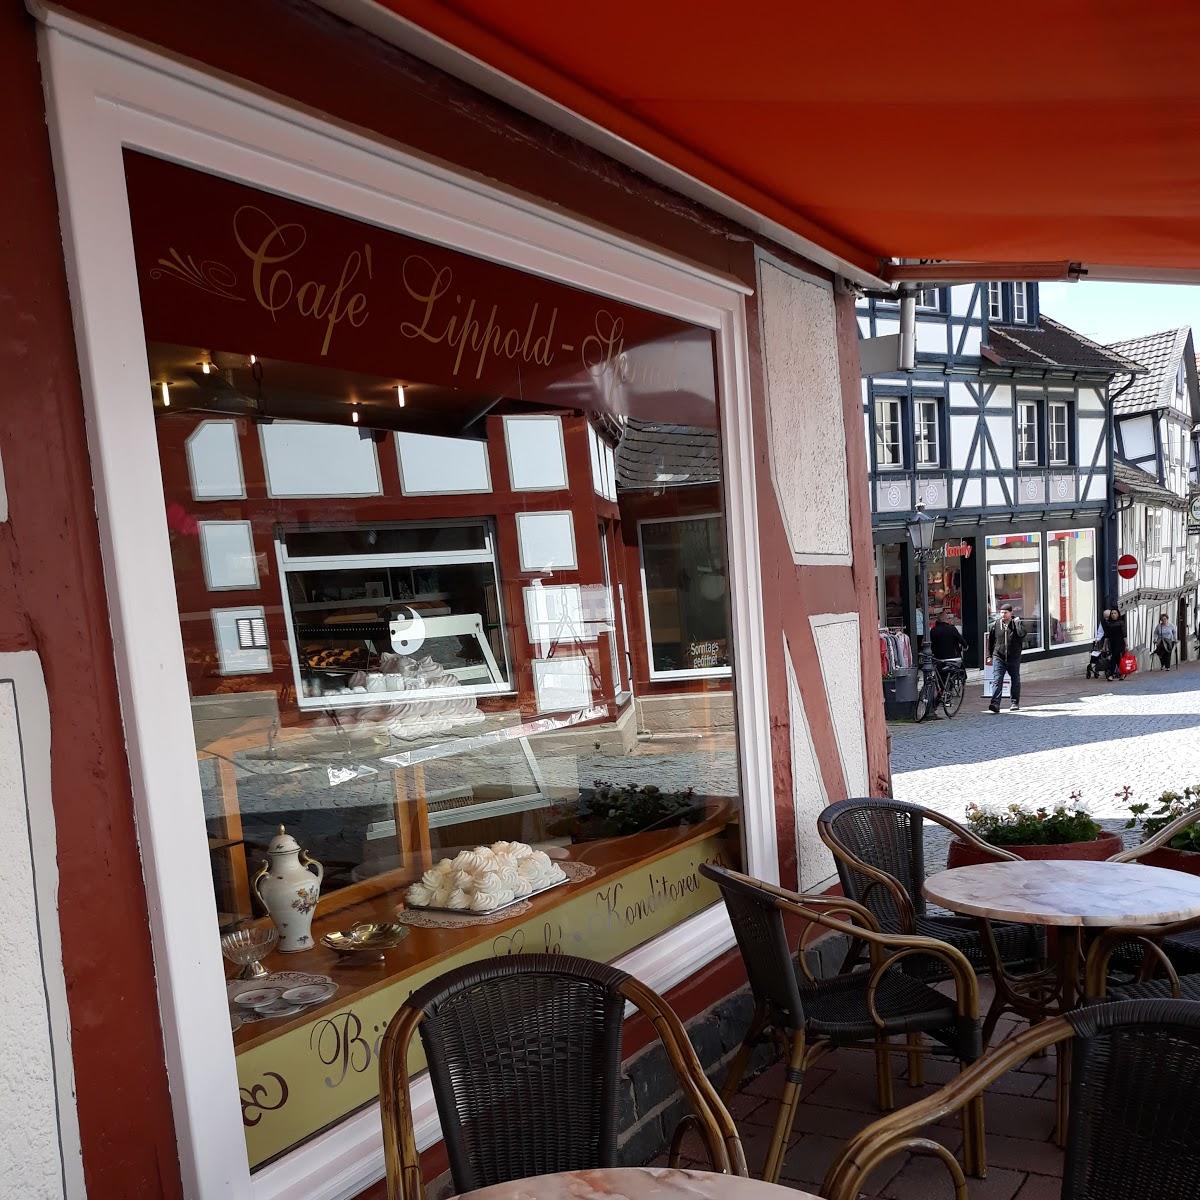 Restaurant "Café Lippold-Spruck" in  (Efze)